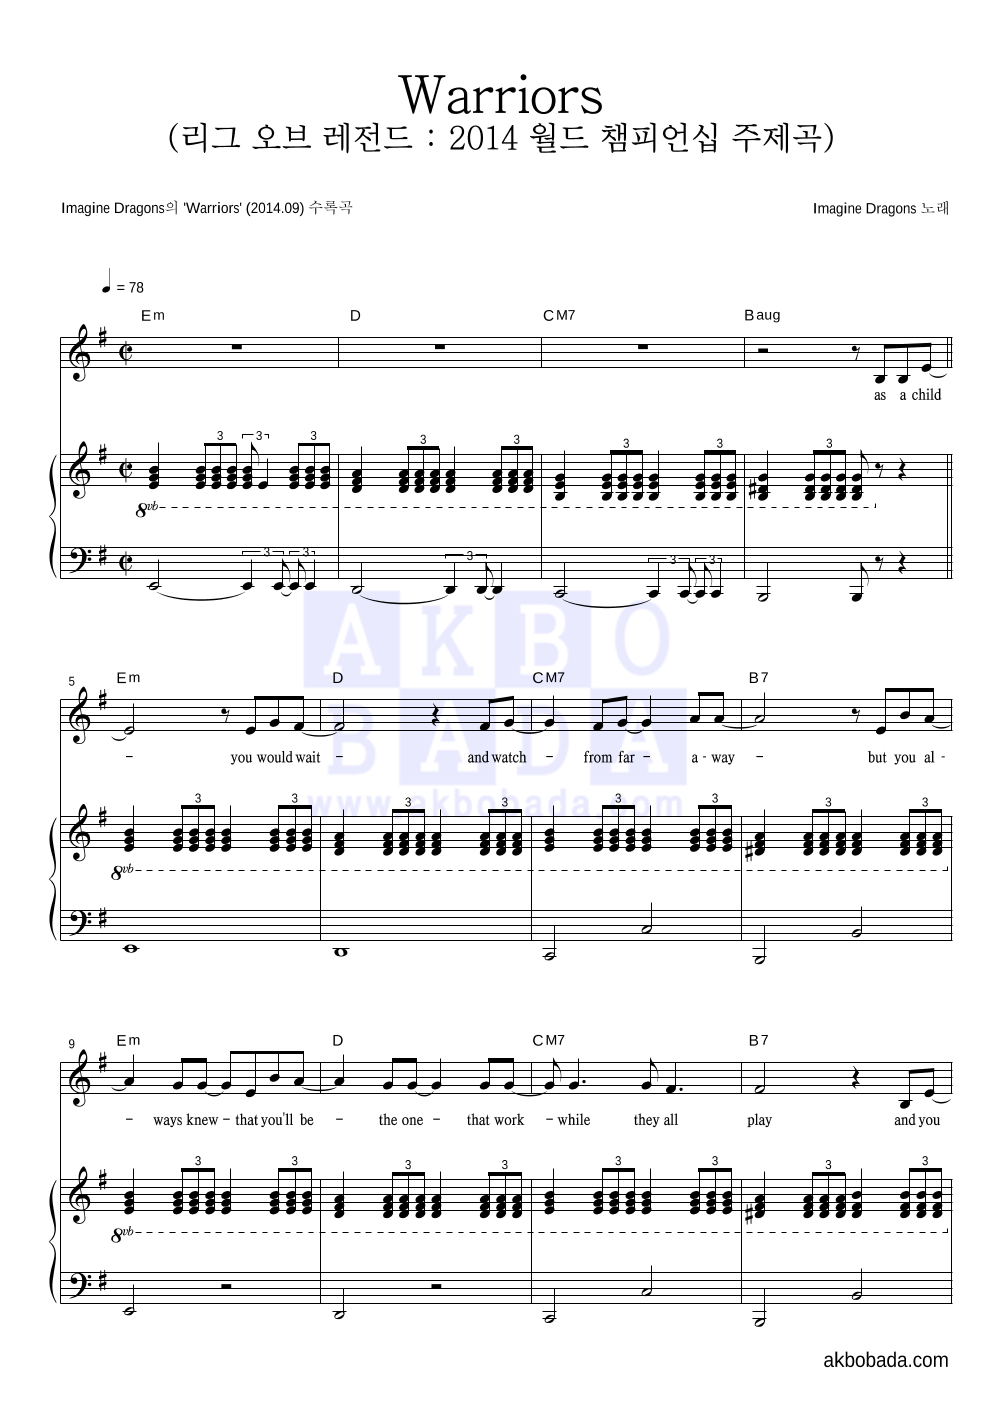 Imagine Dragons - Warriors (리그 오브 레전드 : 2014 월드 챔피언십 주제곡) 피아노 3단 악보 